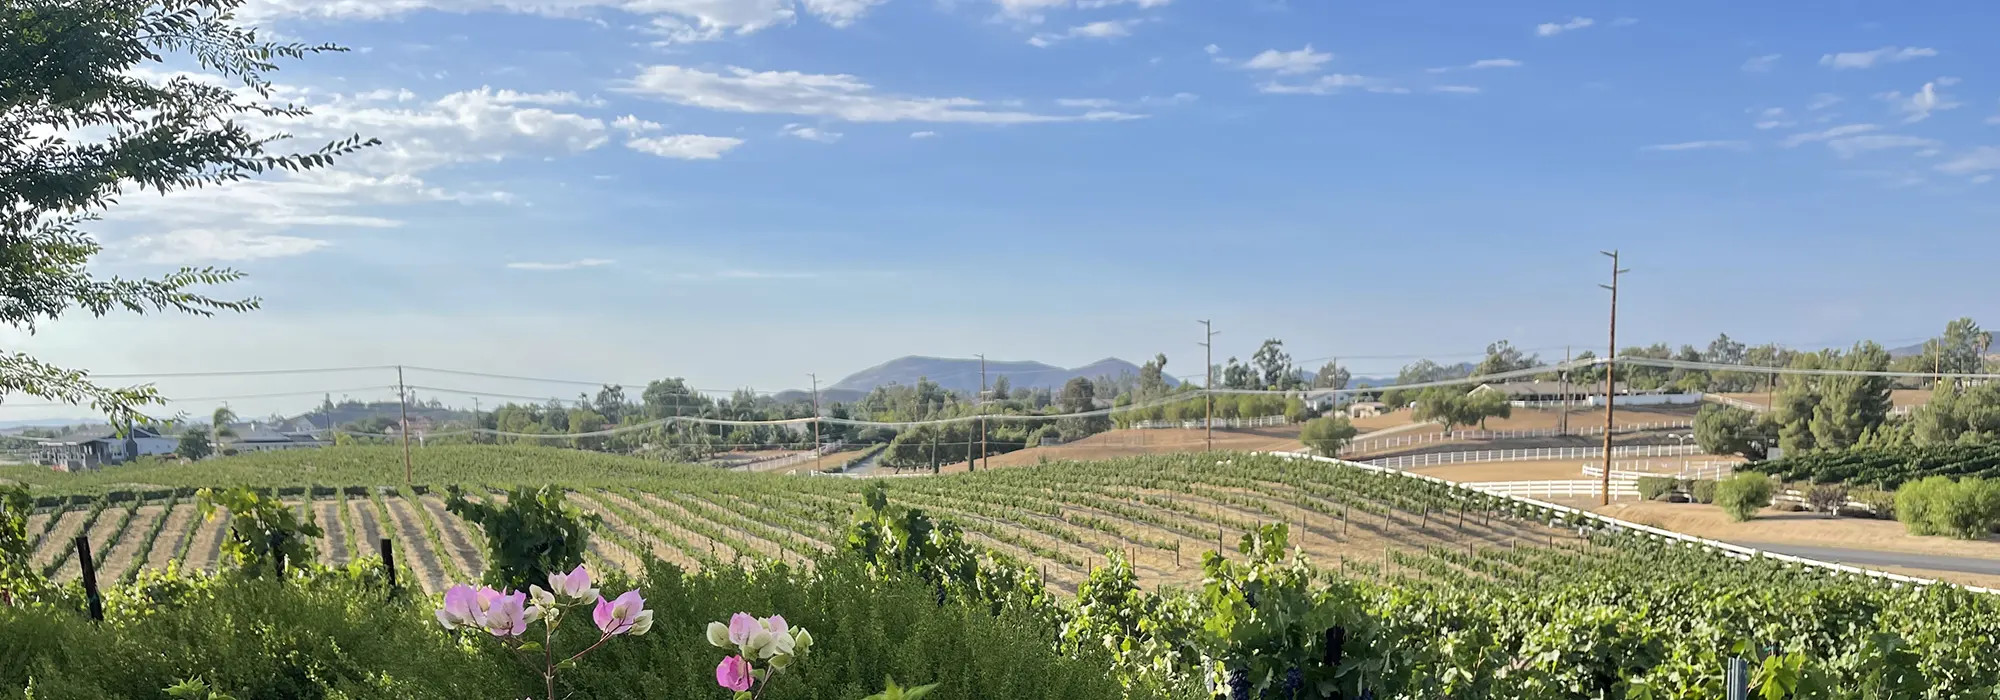 Lorenzi Estate Vineyards & Winery